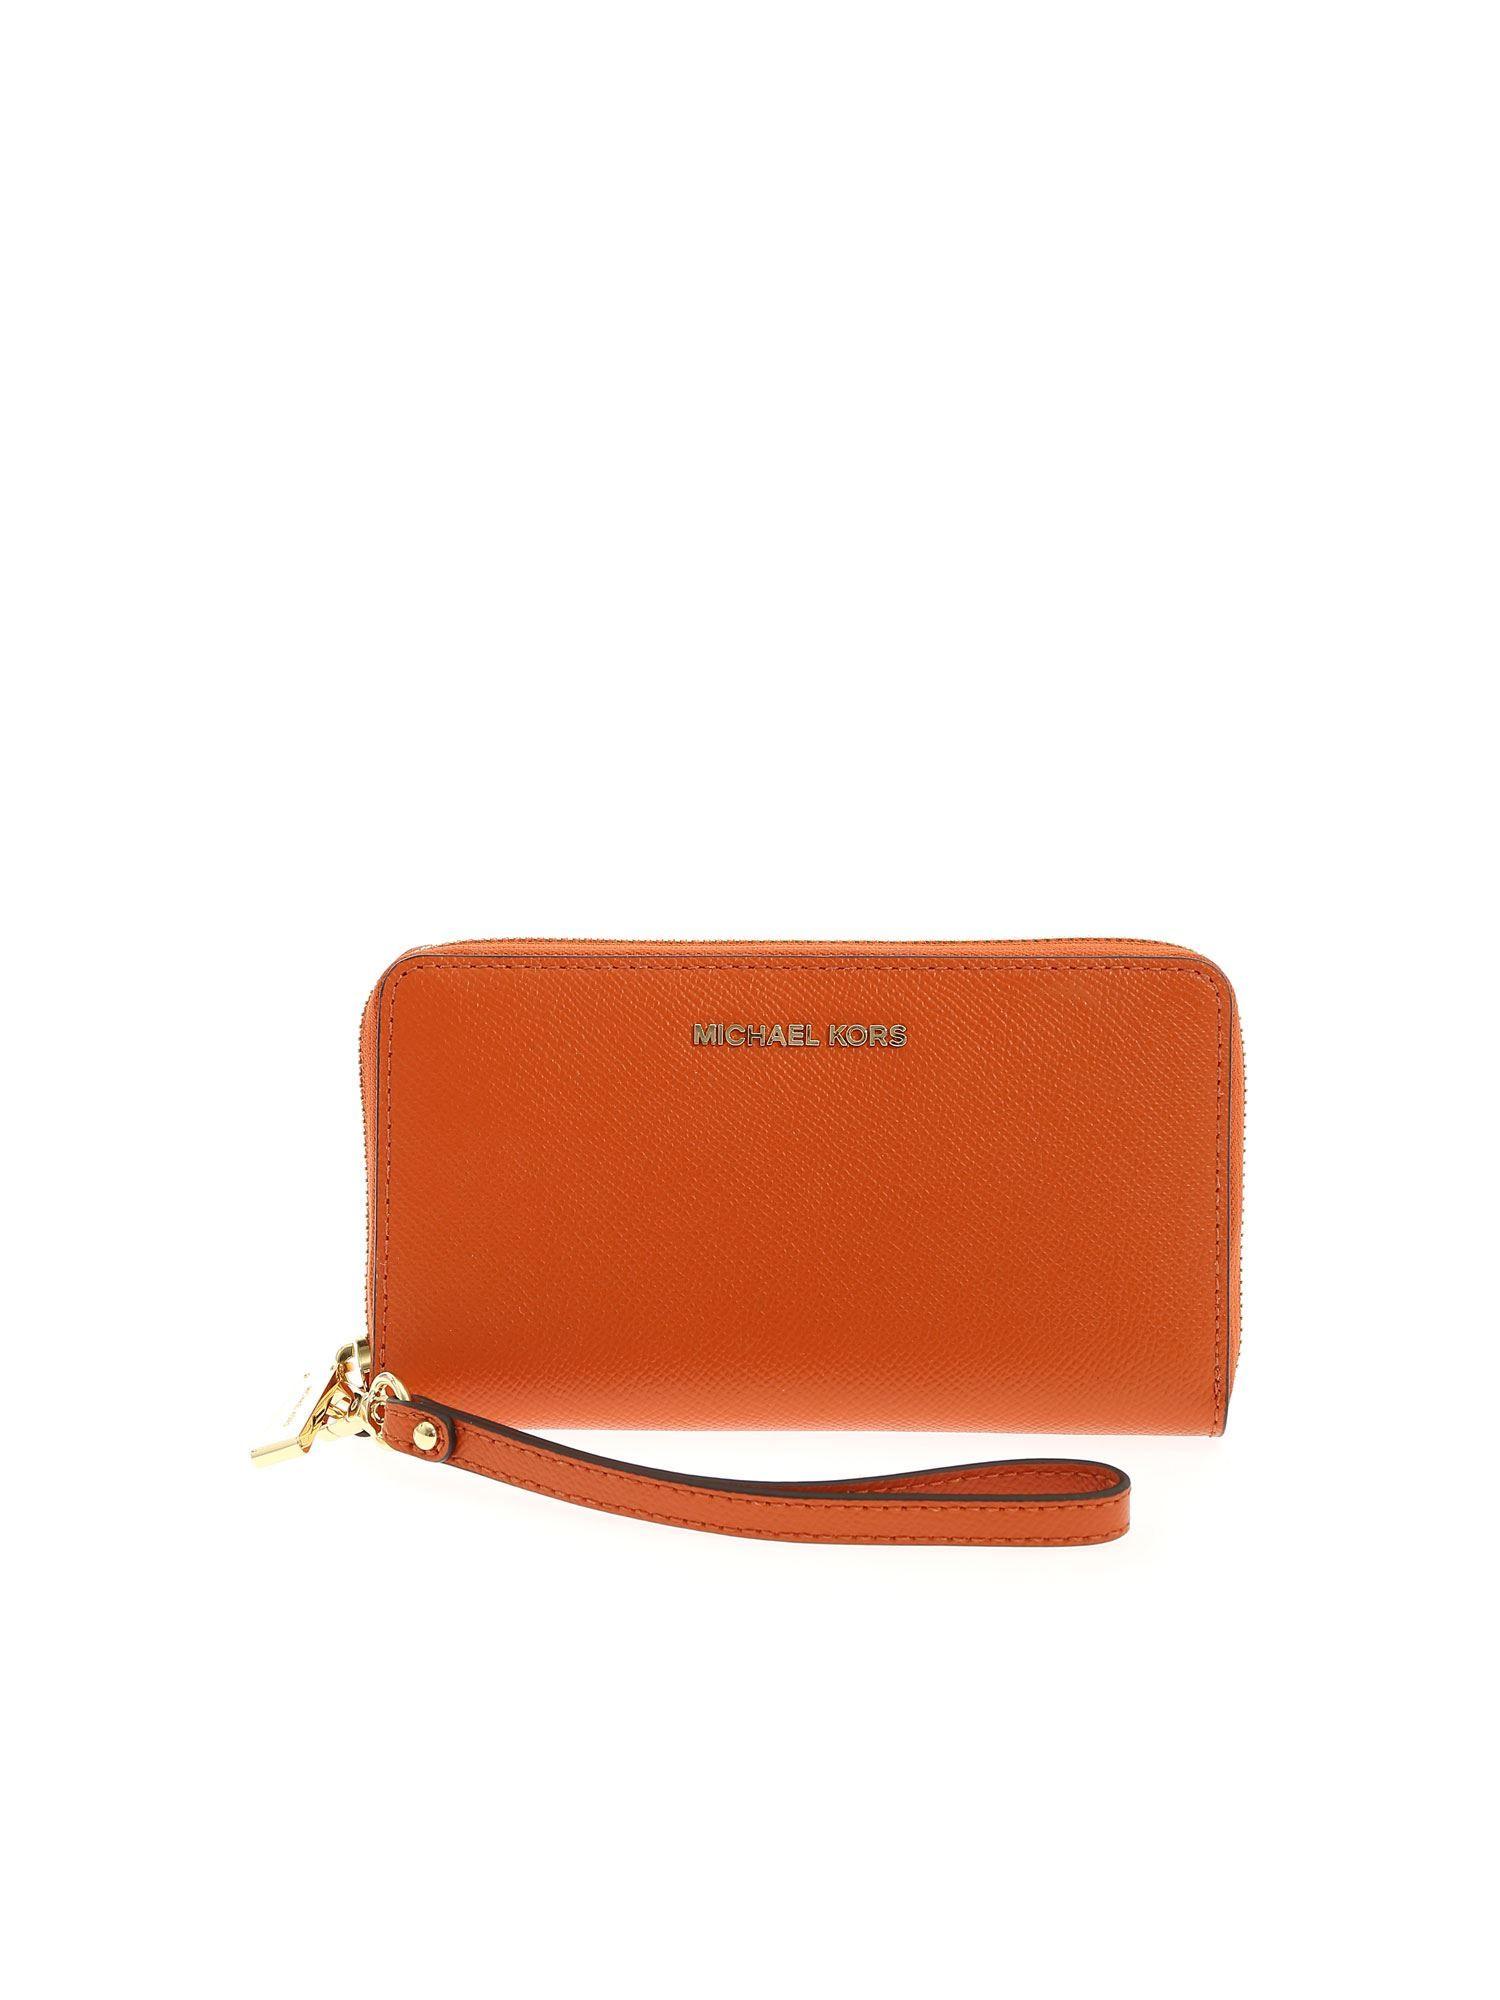 Michael Kors Orange Leather Wallet - Lyst